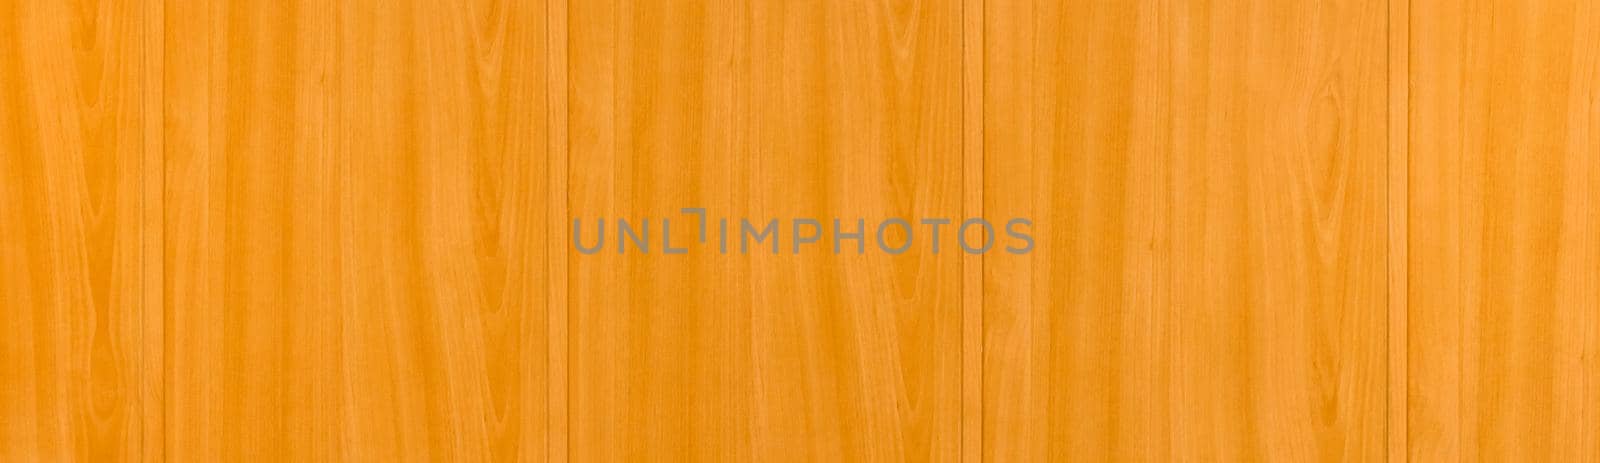 Light orange wooden wallpaper horizontal panel modern interior plank texture background by AYDO8